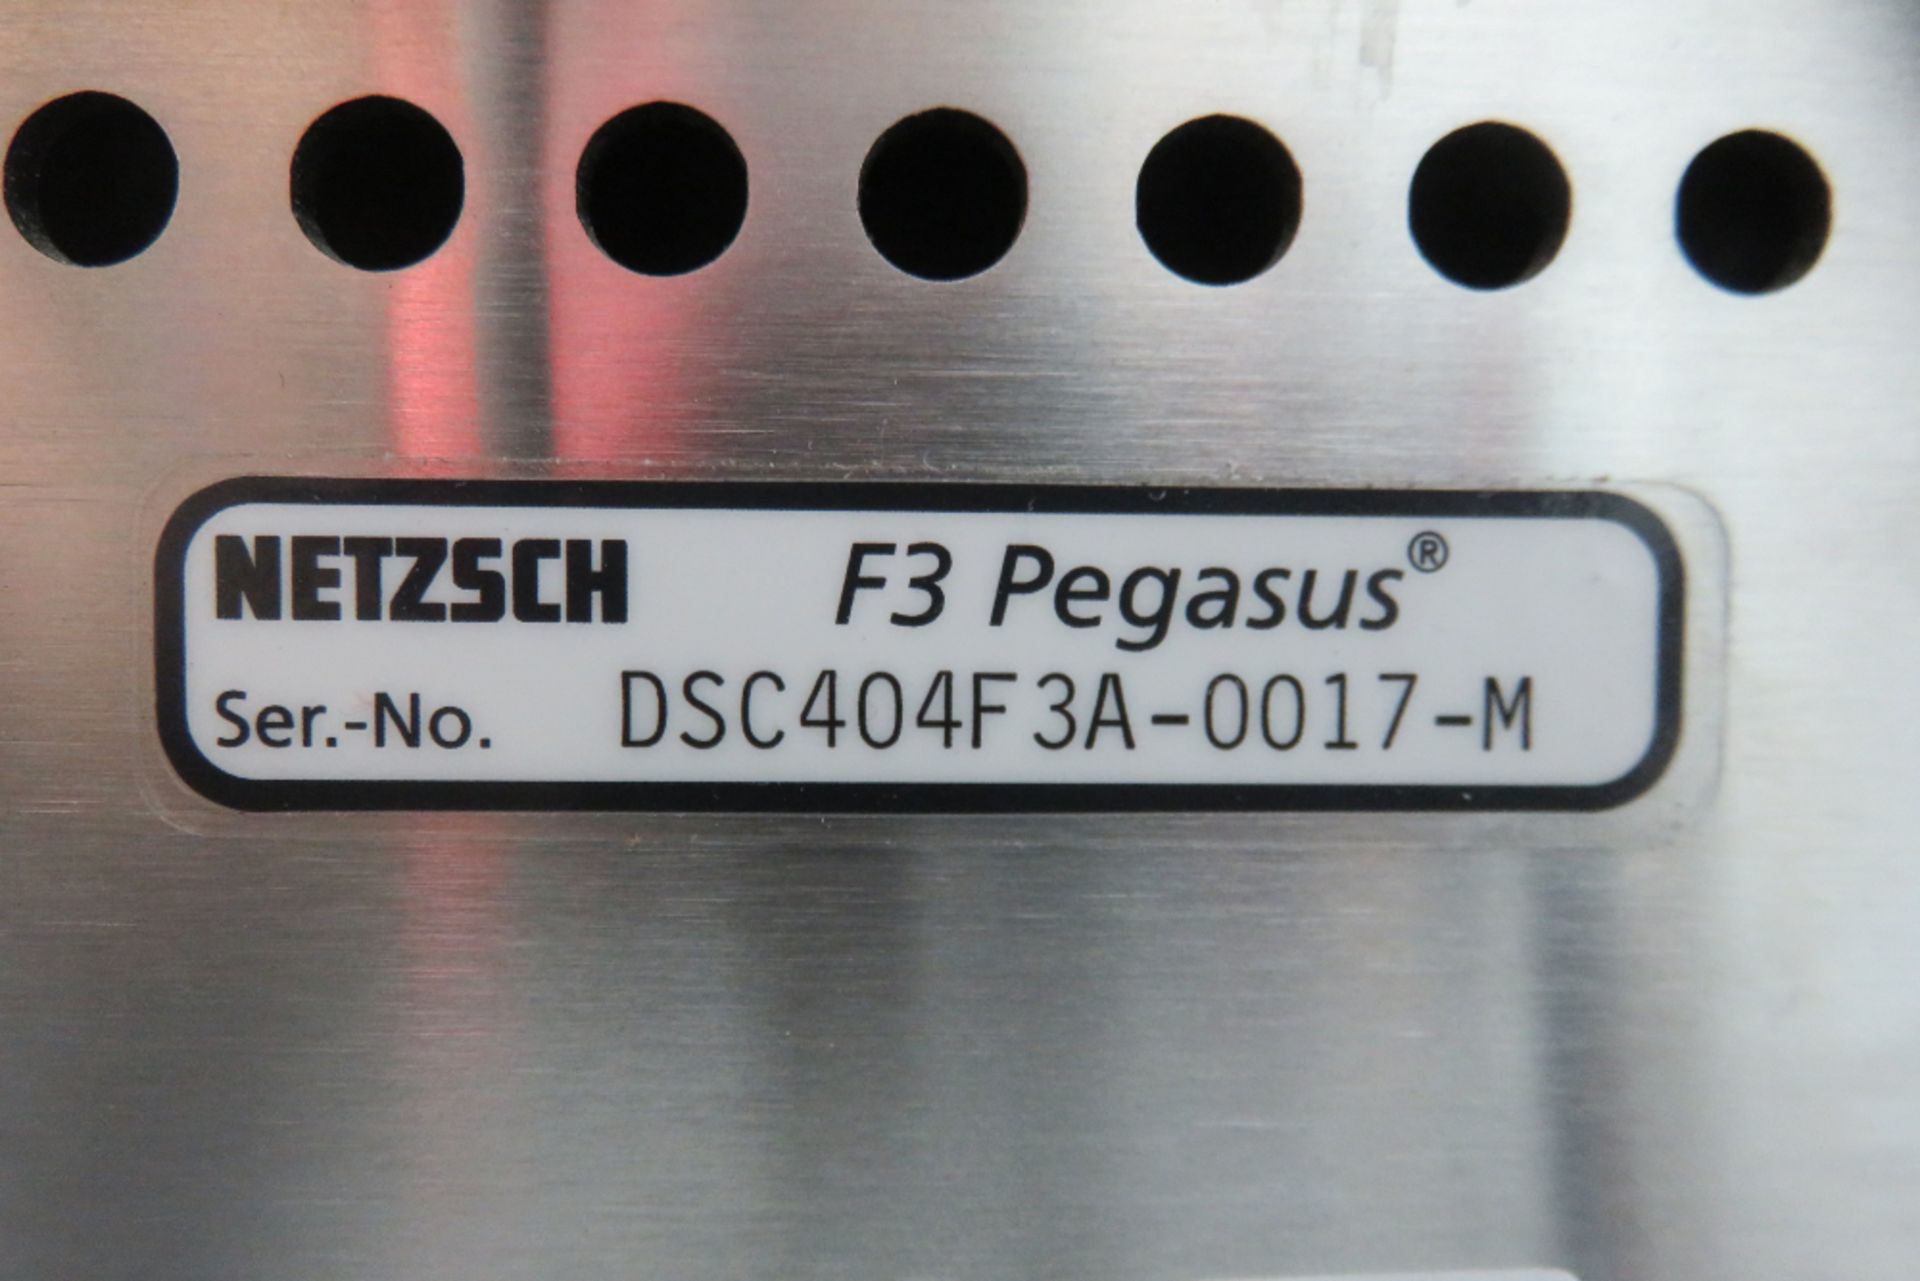 Netzsch DSC 404 F3 Pegasus Thermal Analyzer - Image 10 of 10